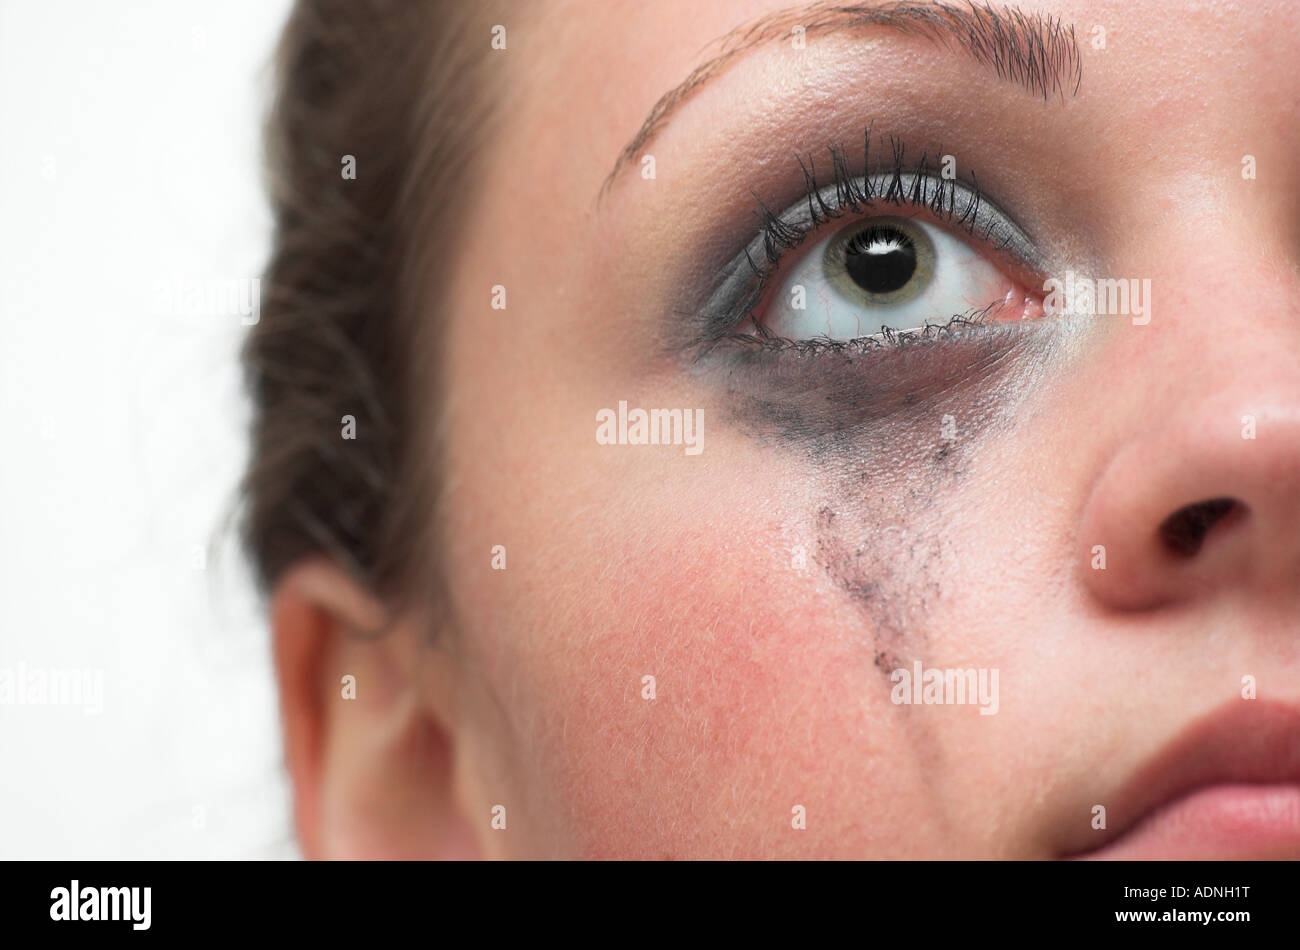 Young woman crying mascara running down cheek Stock Photo - Alamy